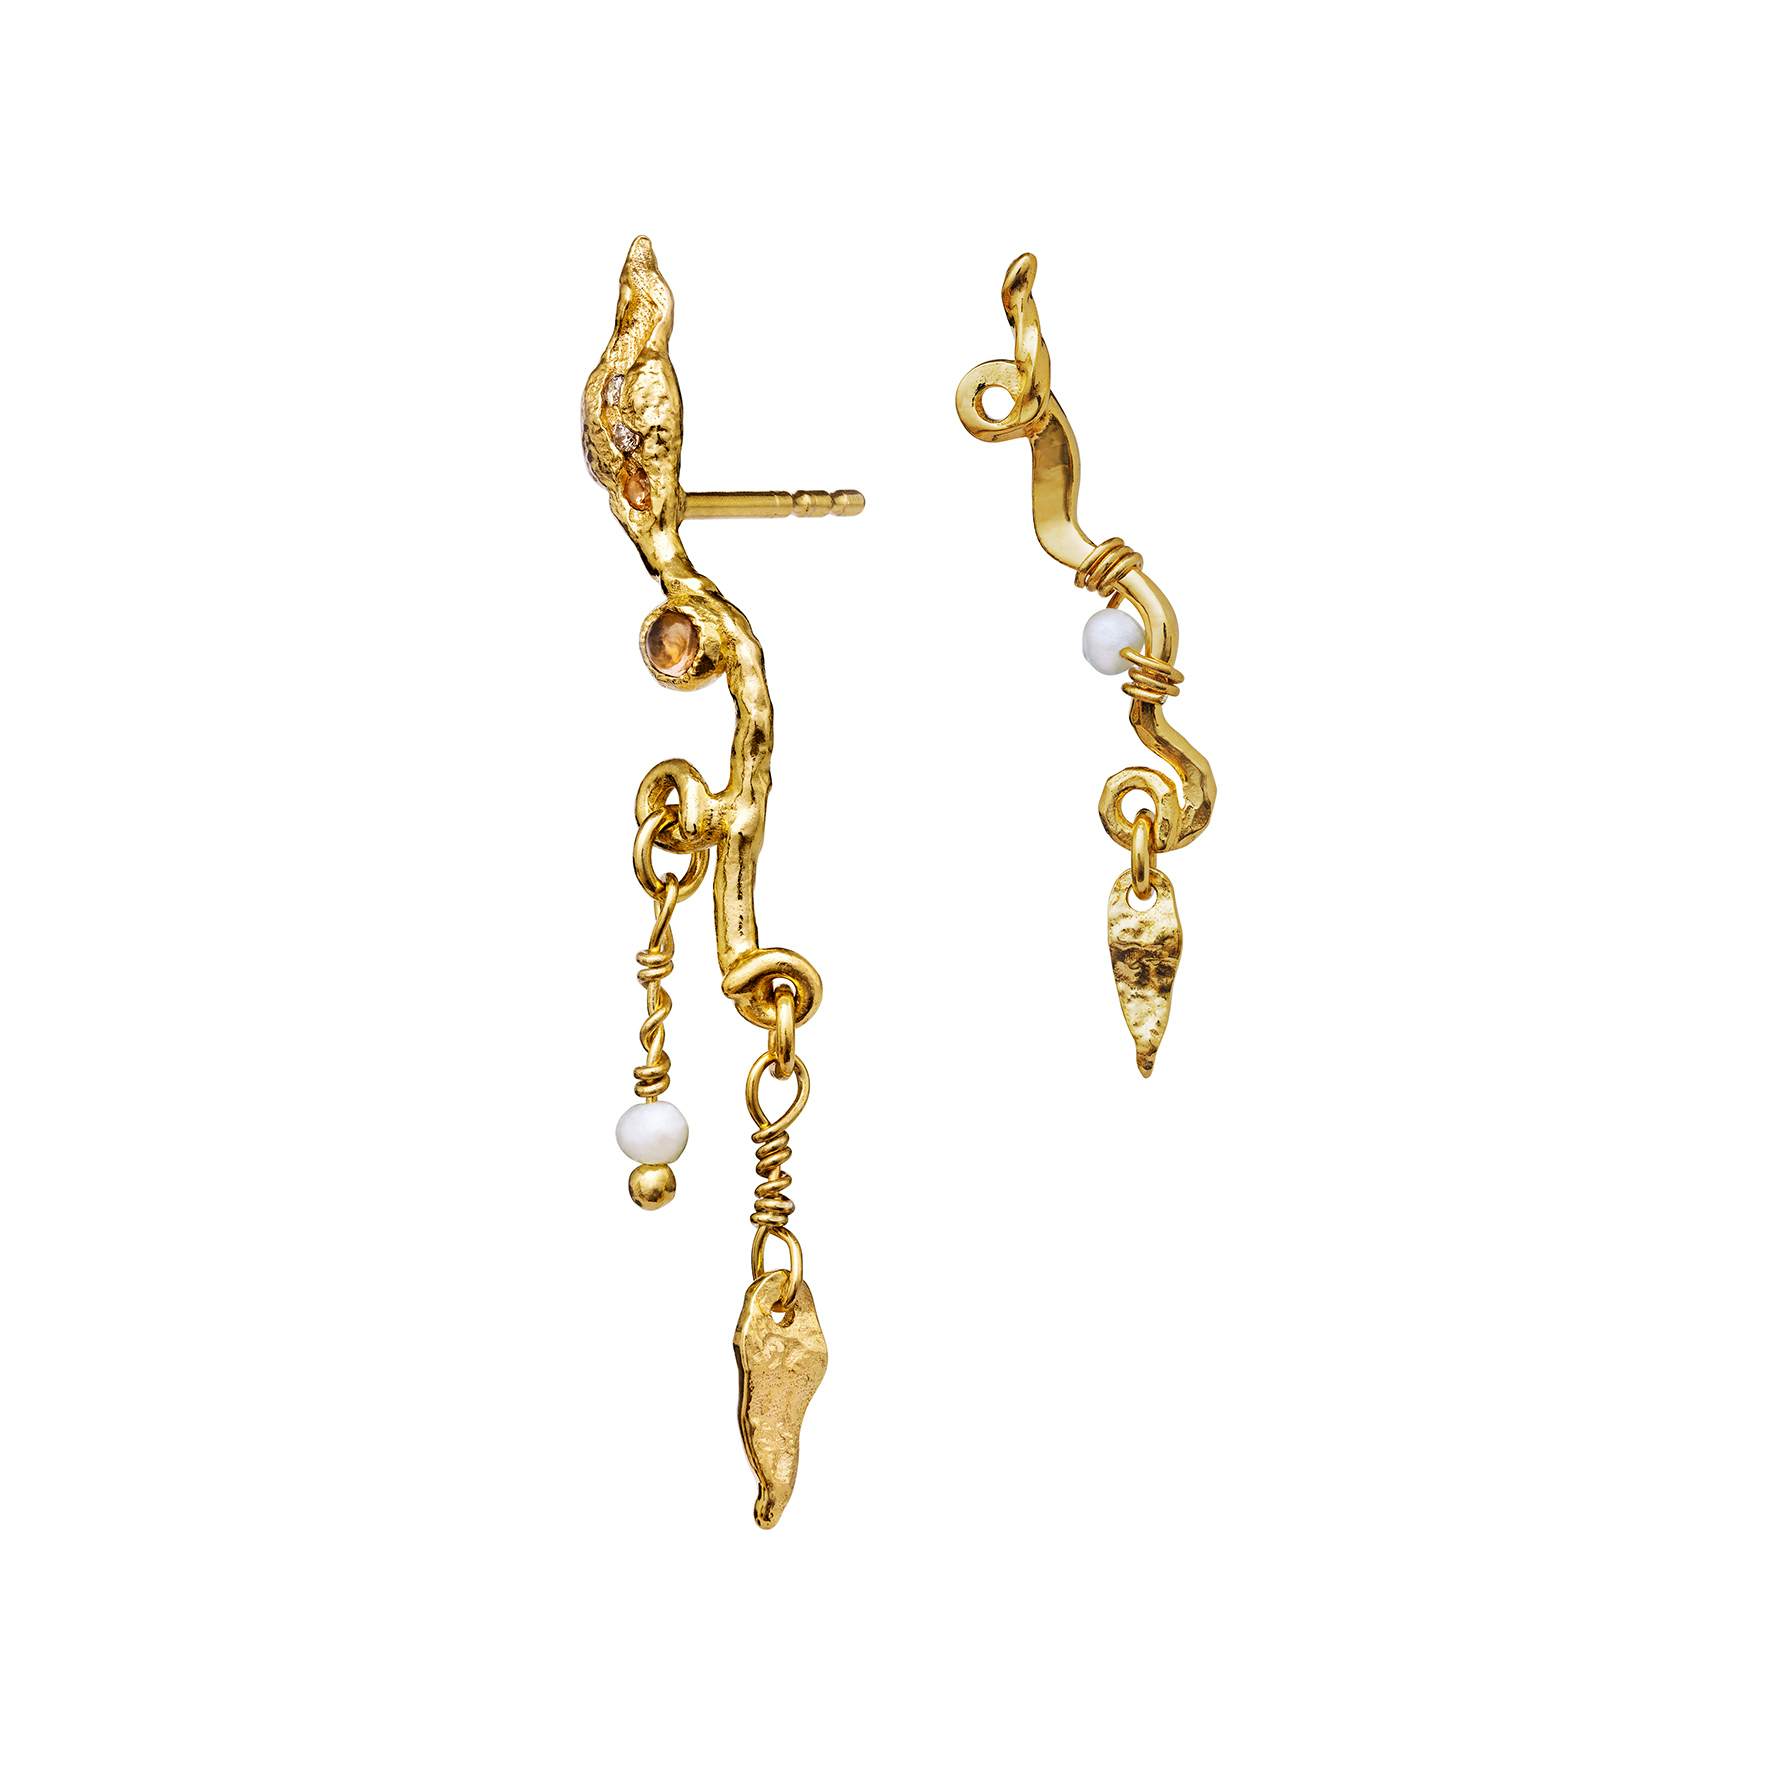 Vilda Earrings von Maanesten in Vergoldet-Silber Sterling 925